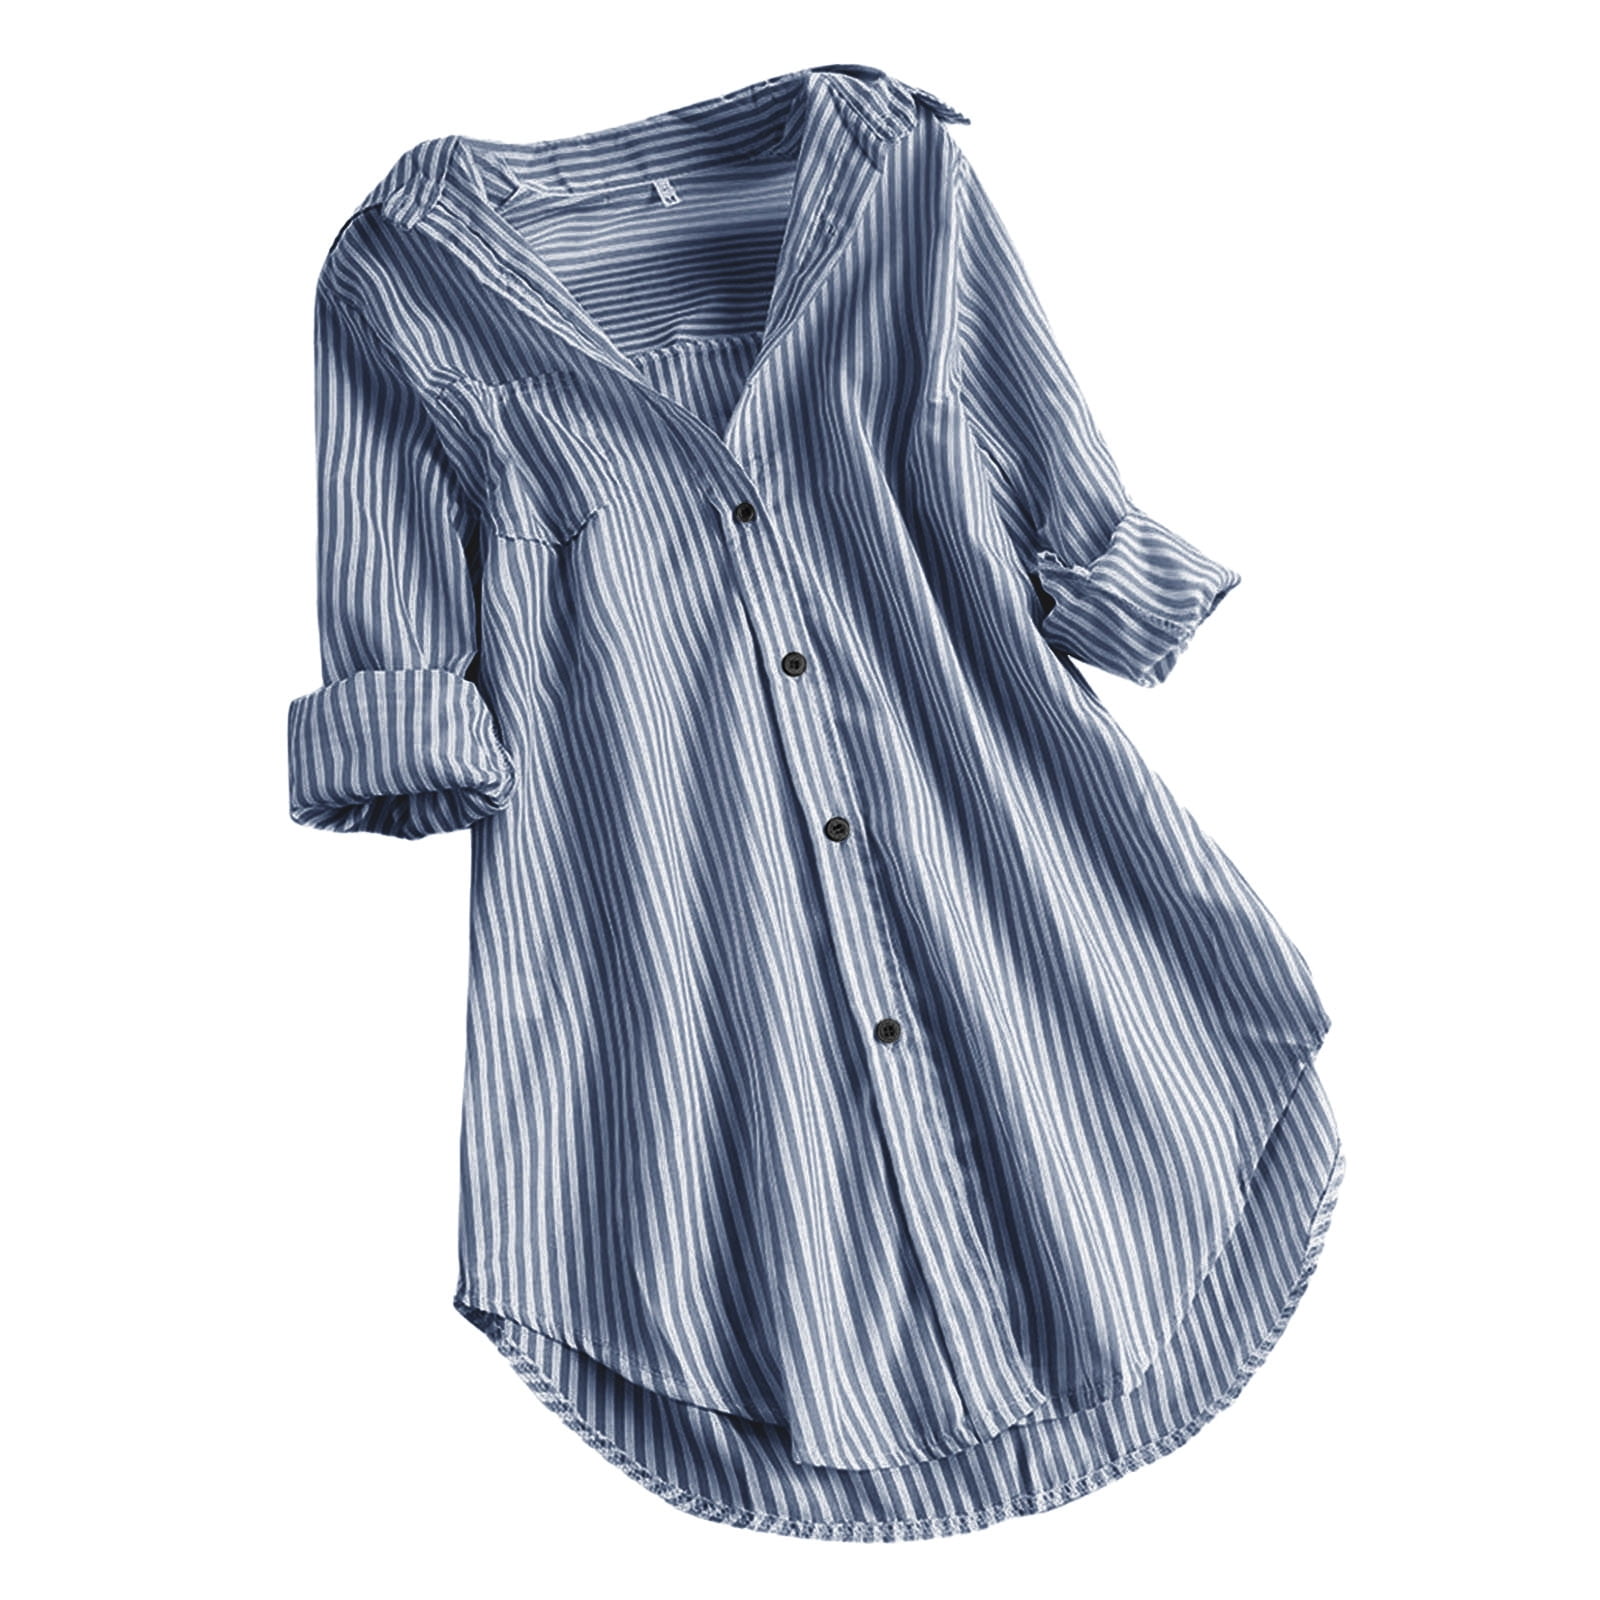 HAPIMO Sales Women's Fashion Shirts T-Shirt Clothes for Women